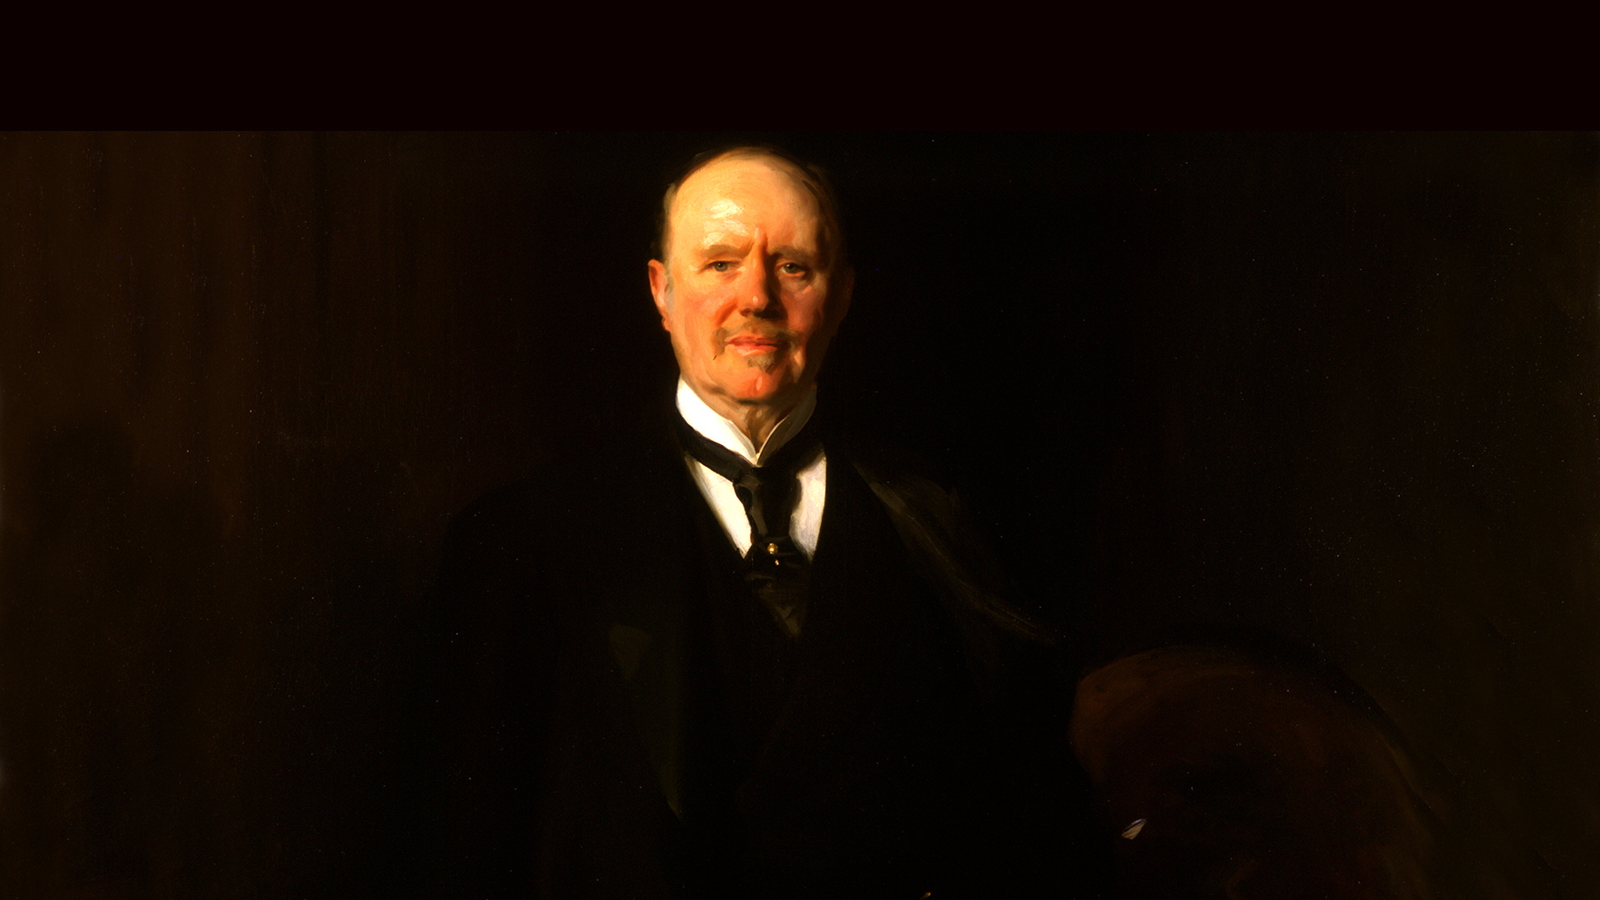 Sir Thomas Sutherland, the founder of HSBC